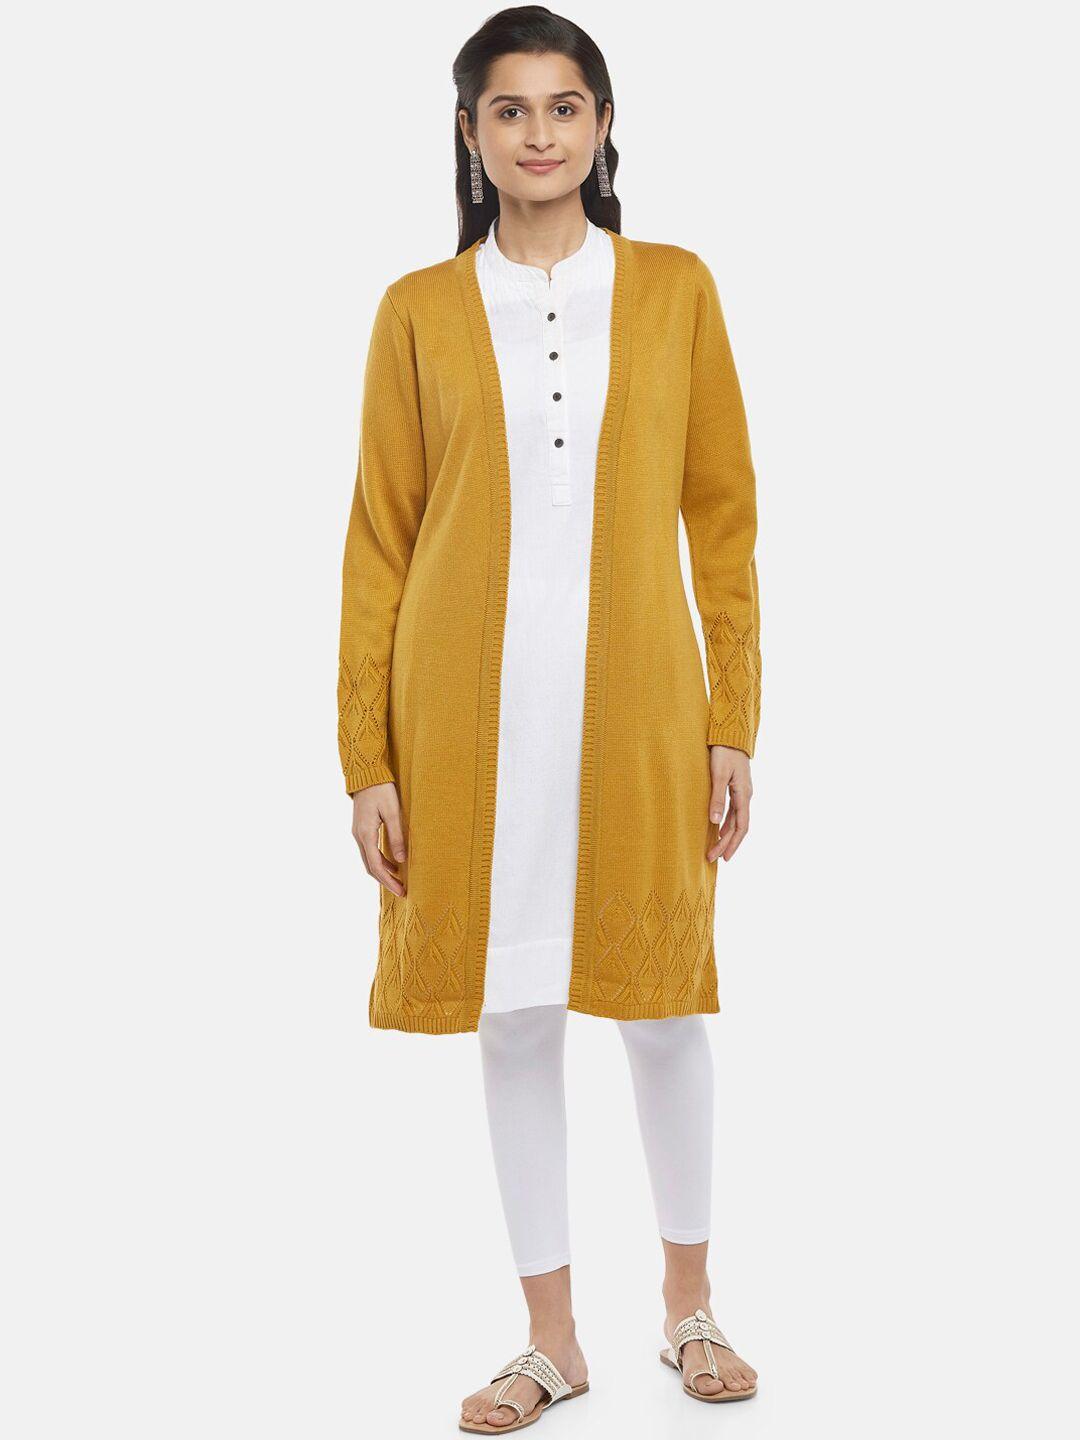 rangmanch by pantaloons women mustard acrylic longline open front jacket